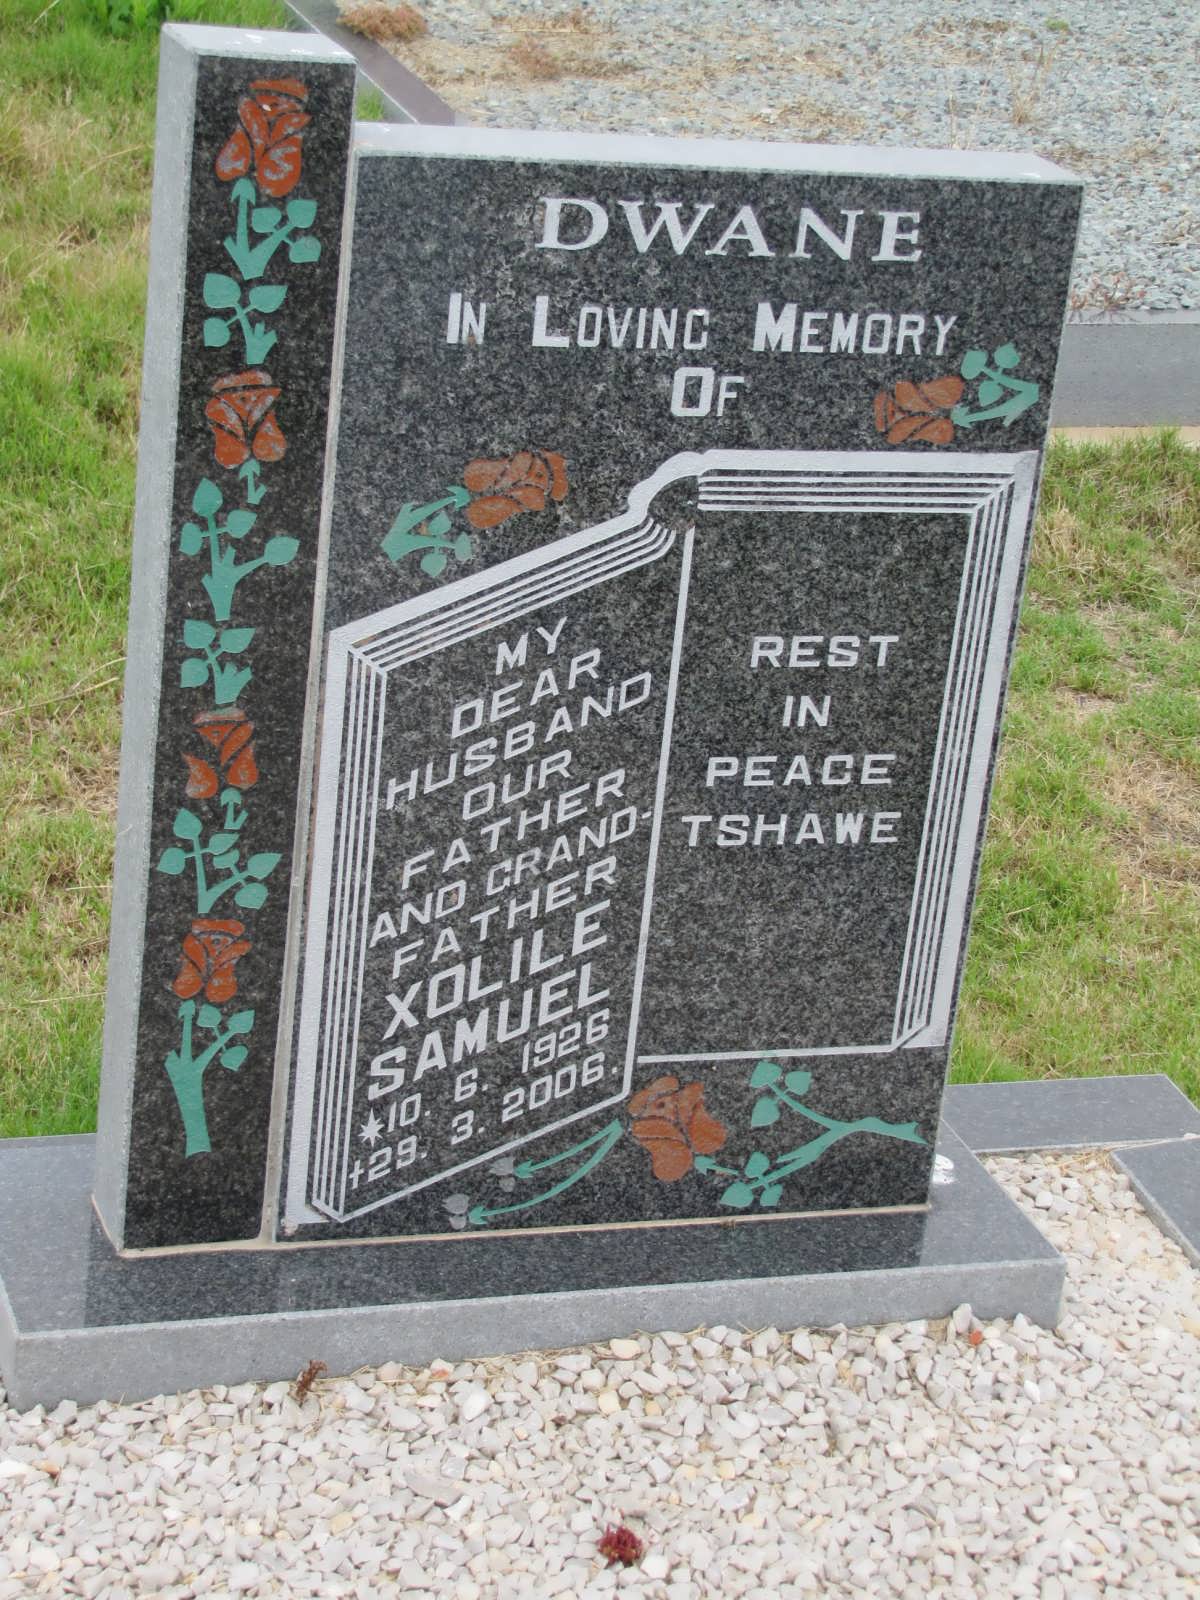 DWANE Xolile Samuel 1926-2006